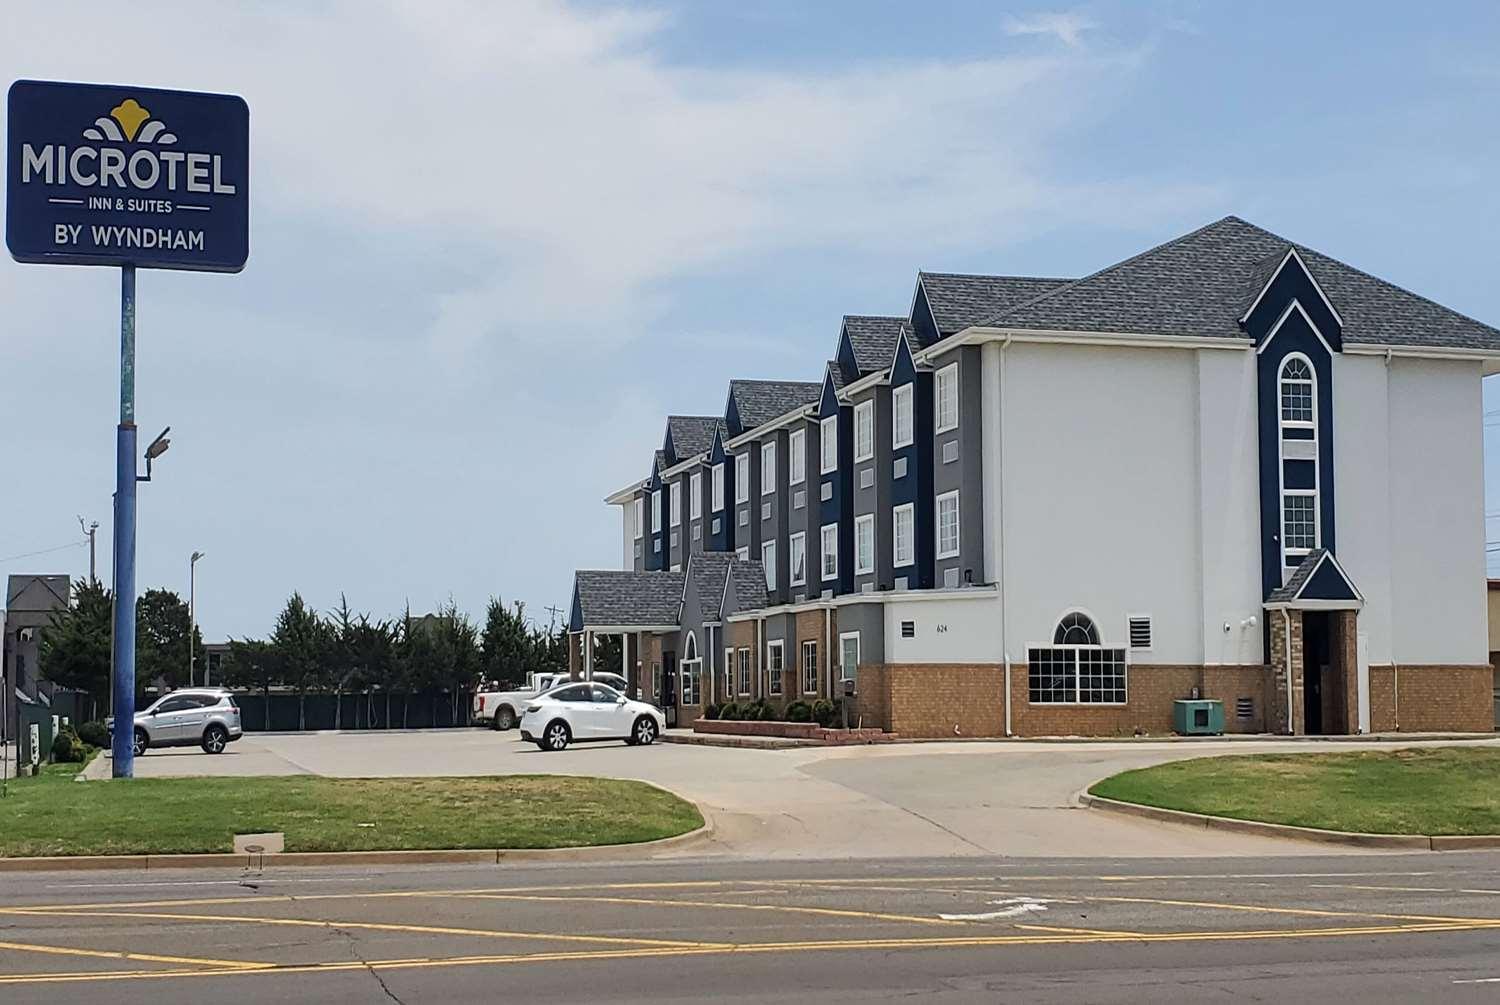 Microtel Inn & Suites by Wyndham Oklahoma City Airport in Oklahoma City, OK